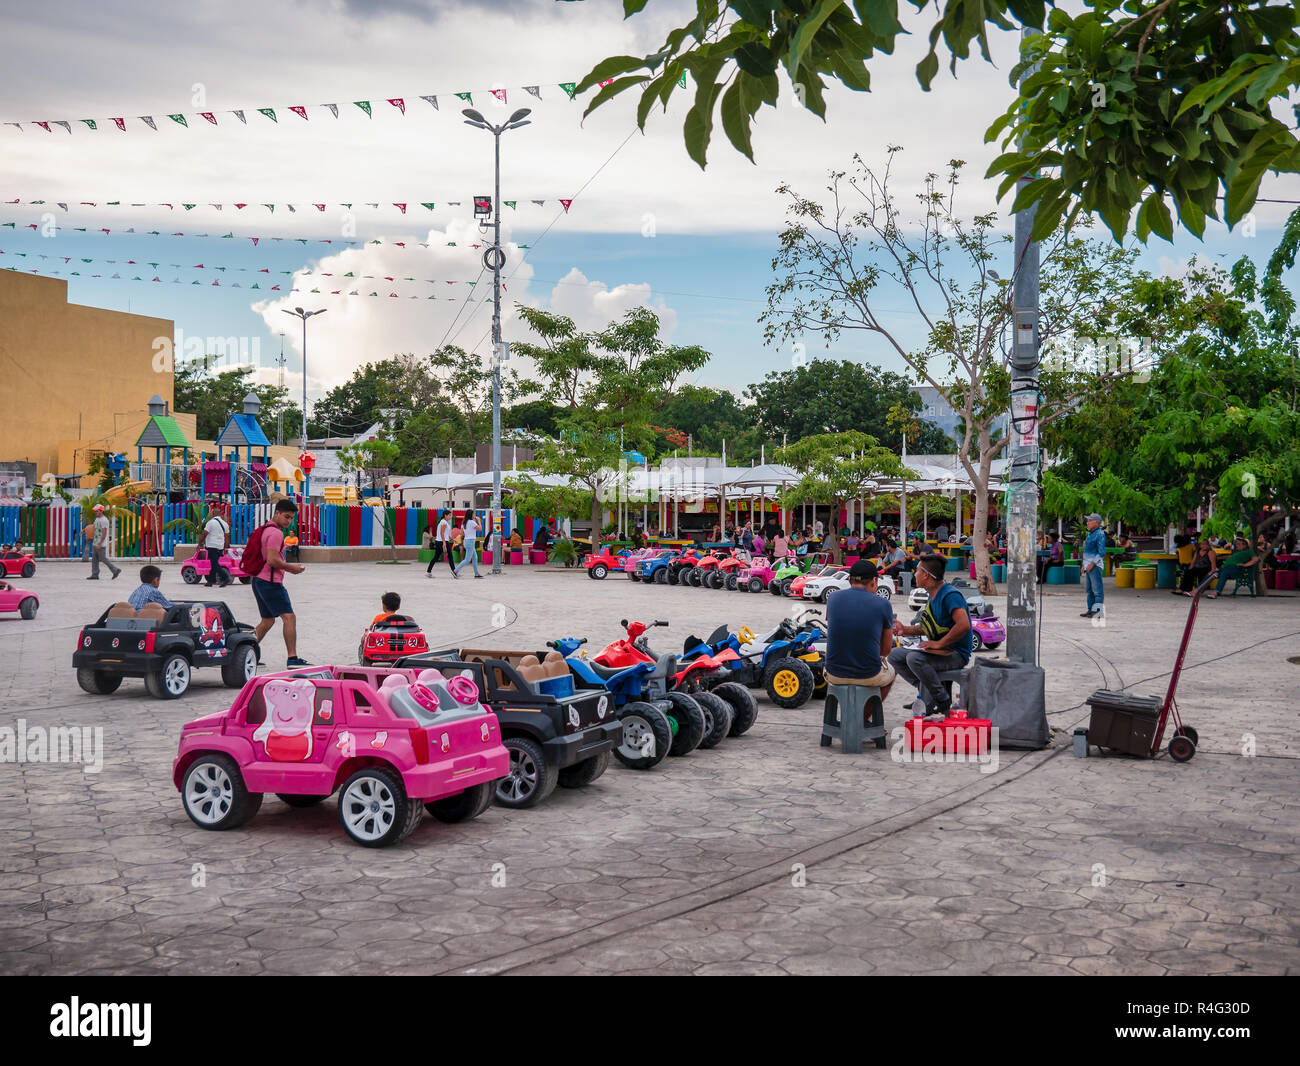 Kinder Auto Karussell auf dem Platz, El Parque de Las Palapas, Cancún, Mexiko, im September 8, 2018 8, 2018 Stockfoto